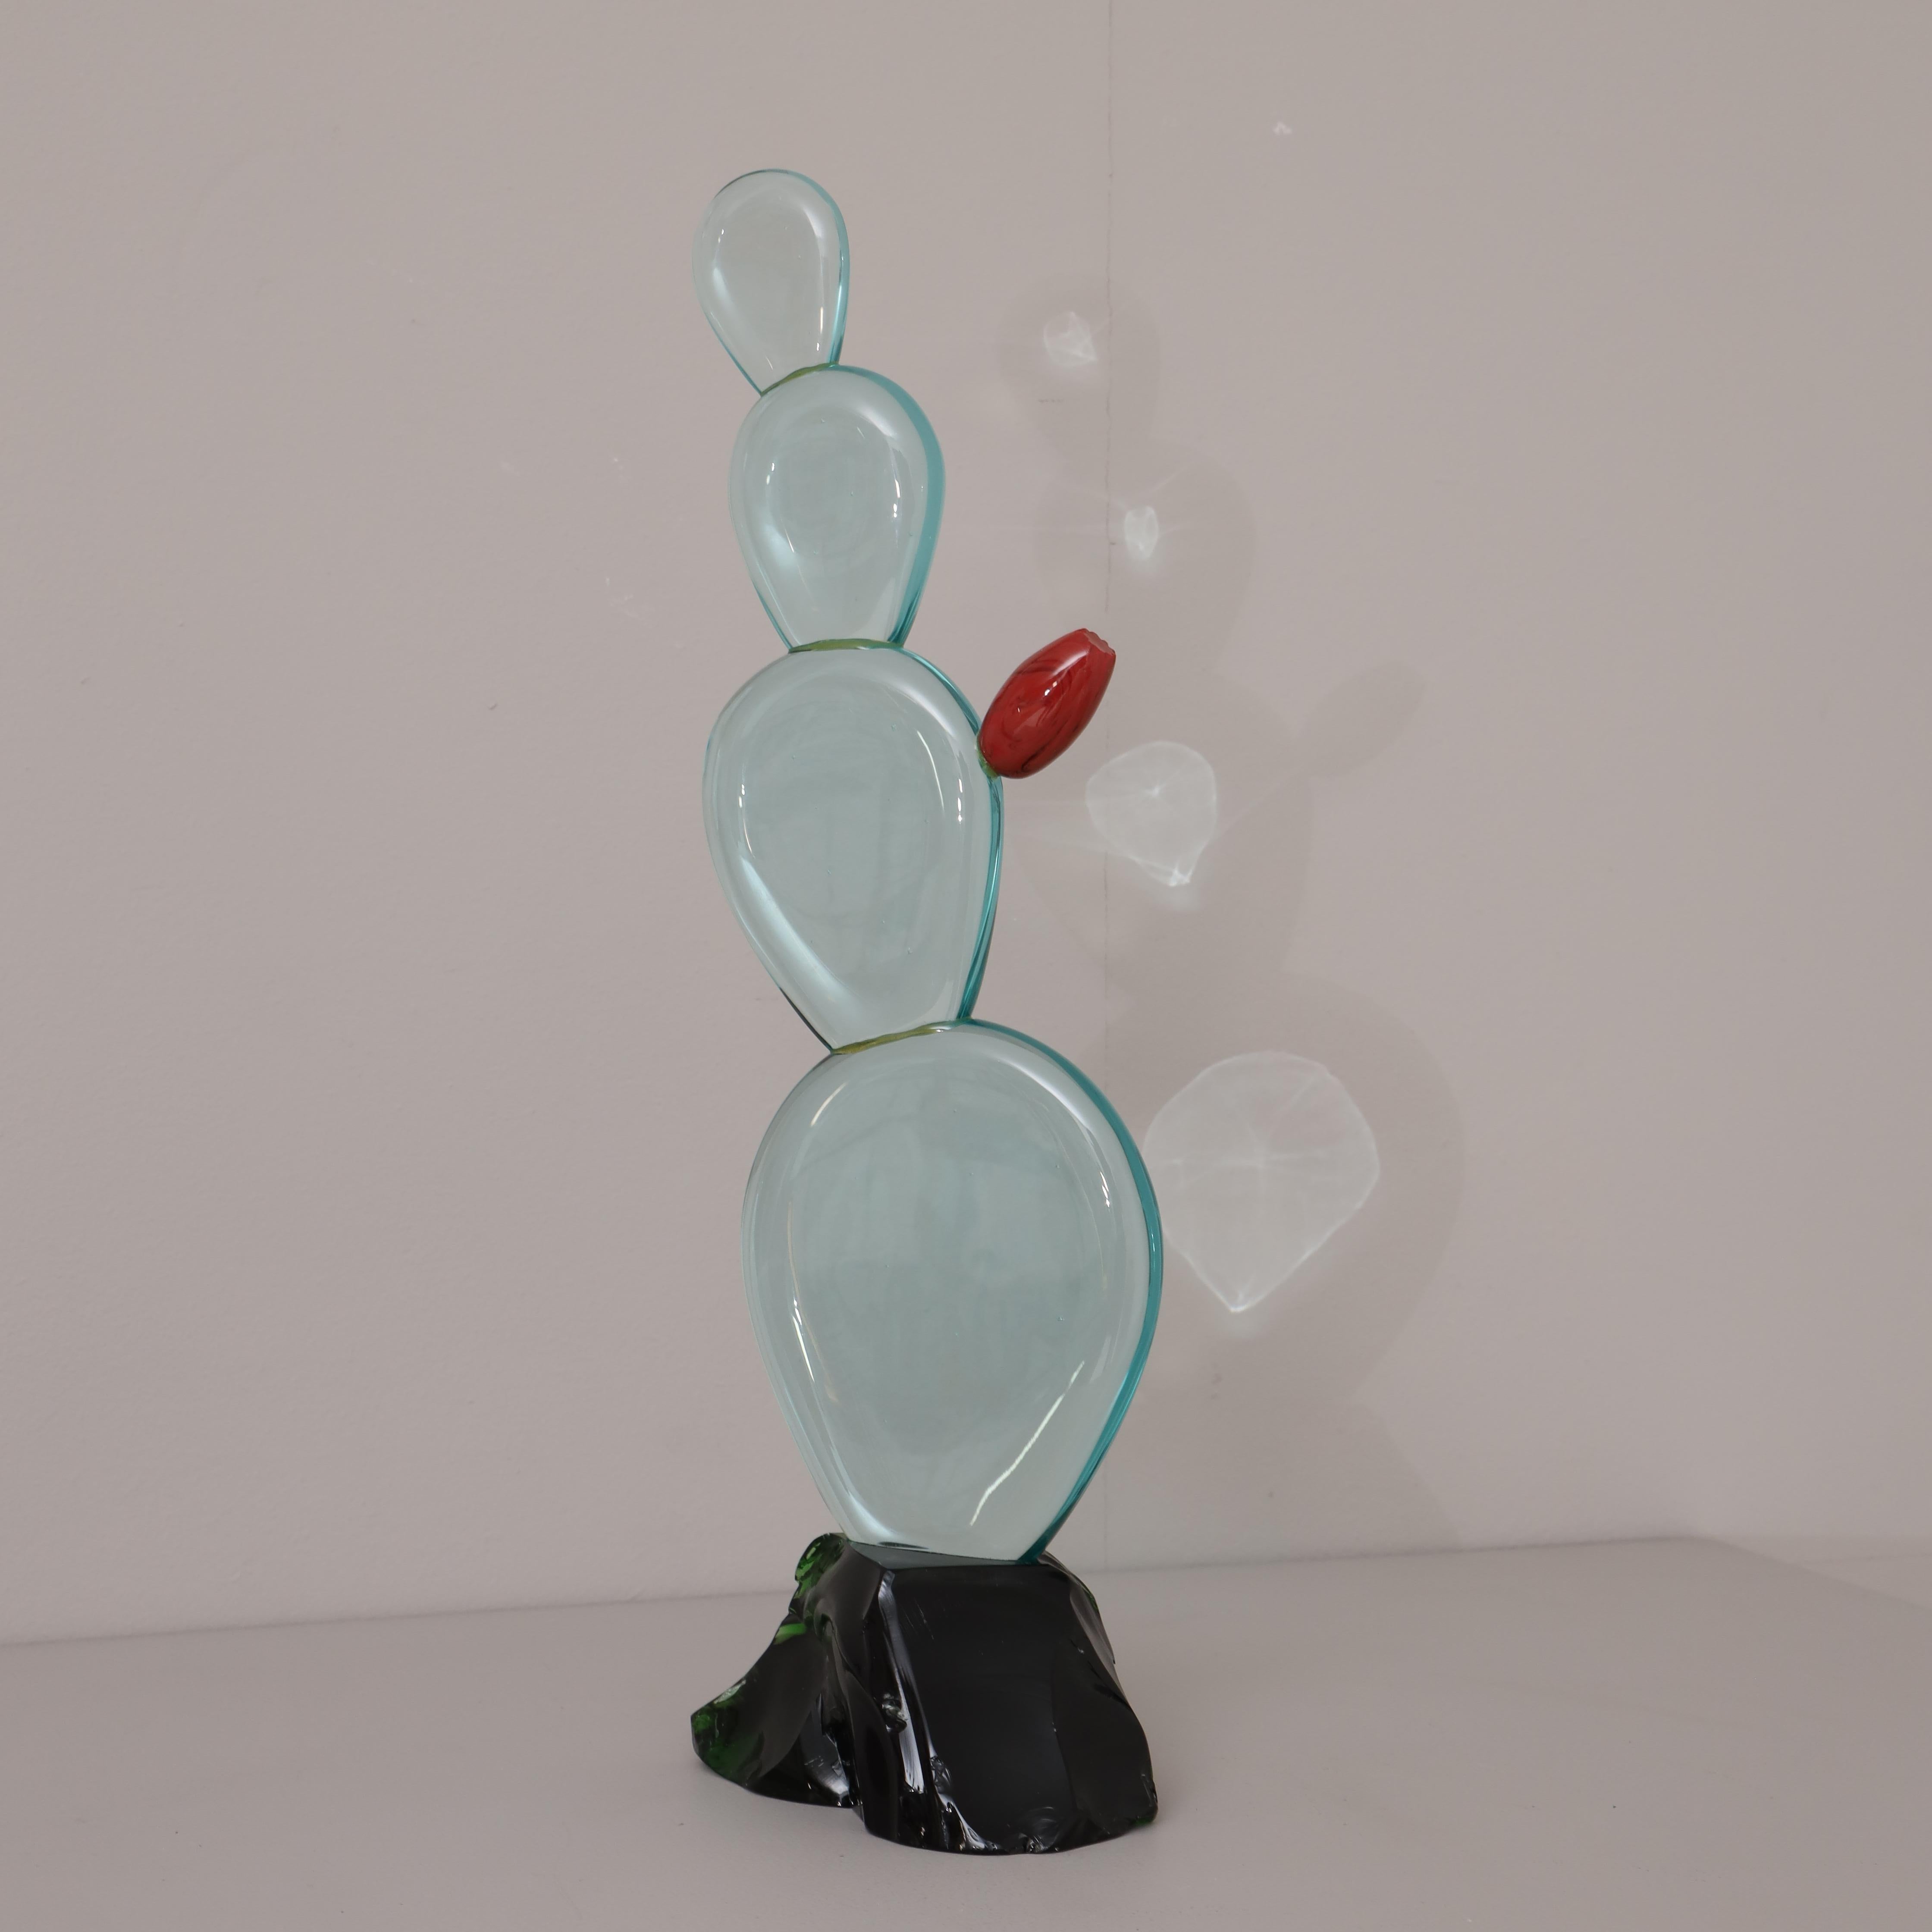 Dekorative abstrakte italienische Glaskunstskulptur.
Klarglas, rotes Glas und smaragdgrüner Glassockel.